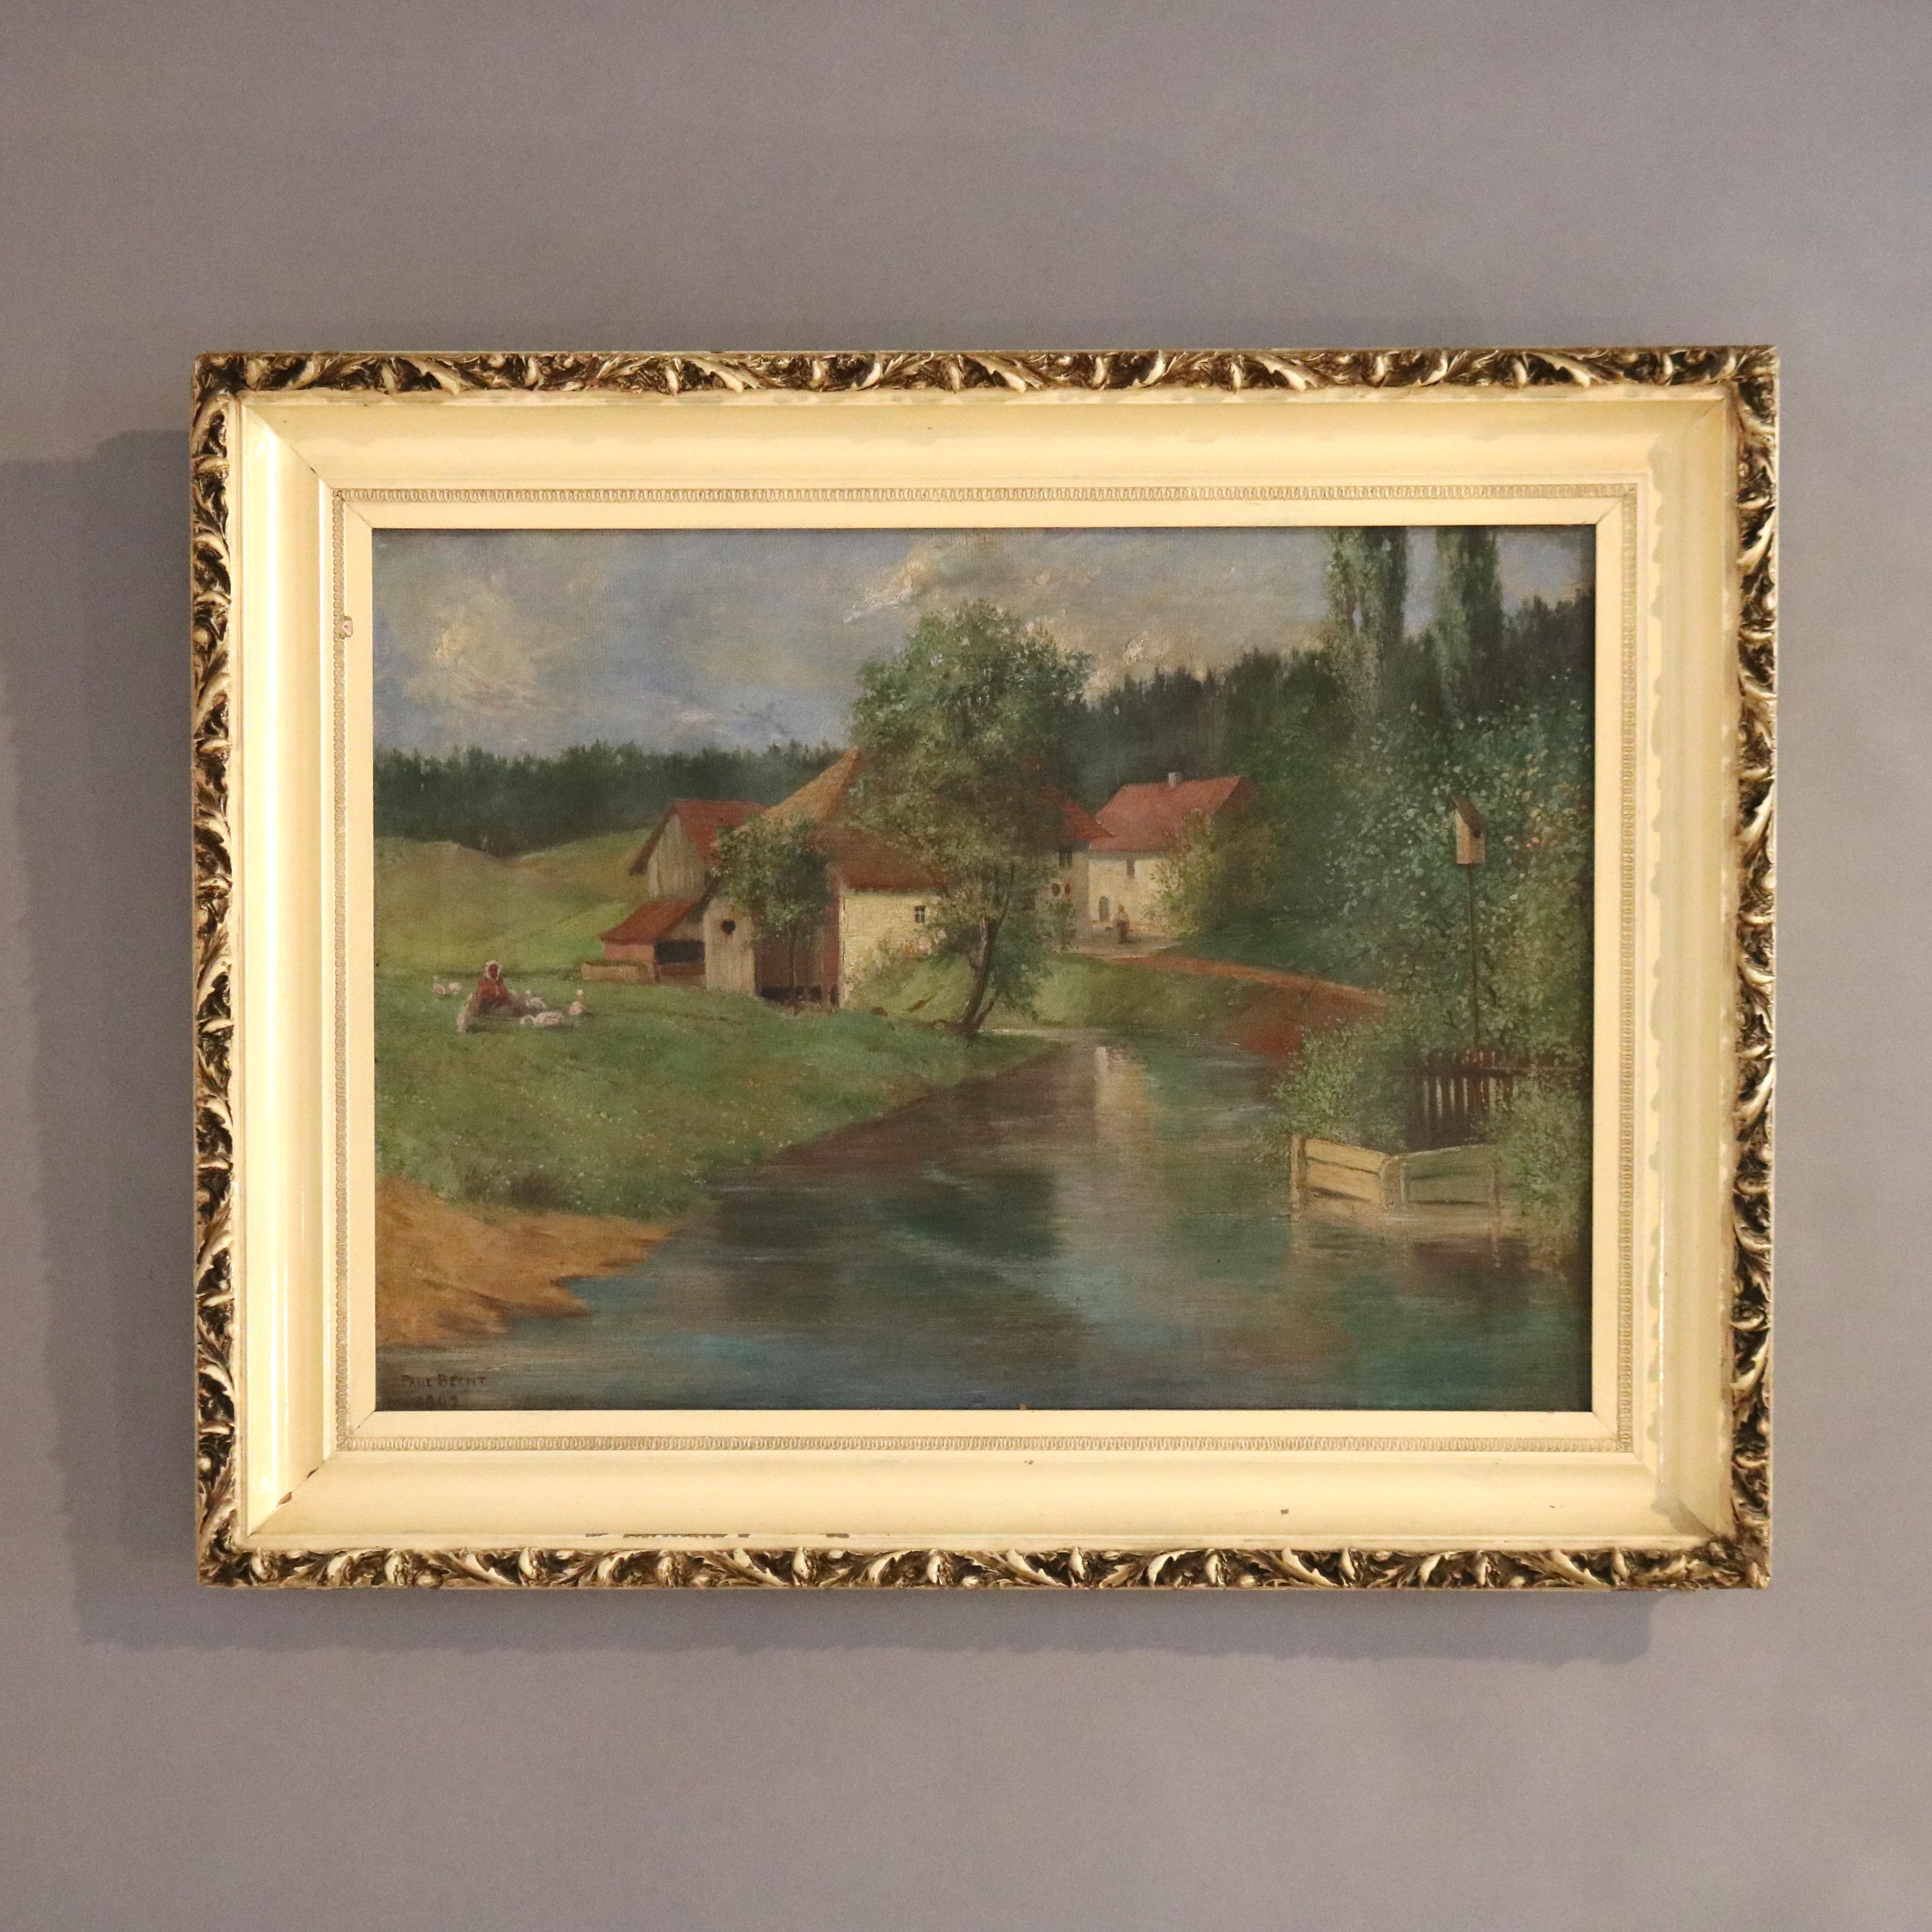 Antique Oil on Canvas Landscape Painting, Farm Scene, Signed Brecht, 1907 For Sale 8